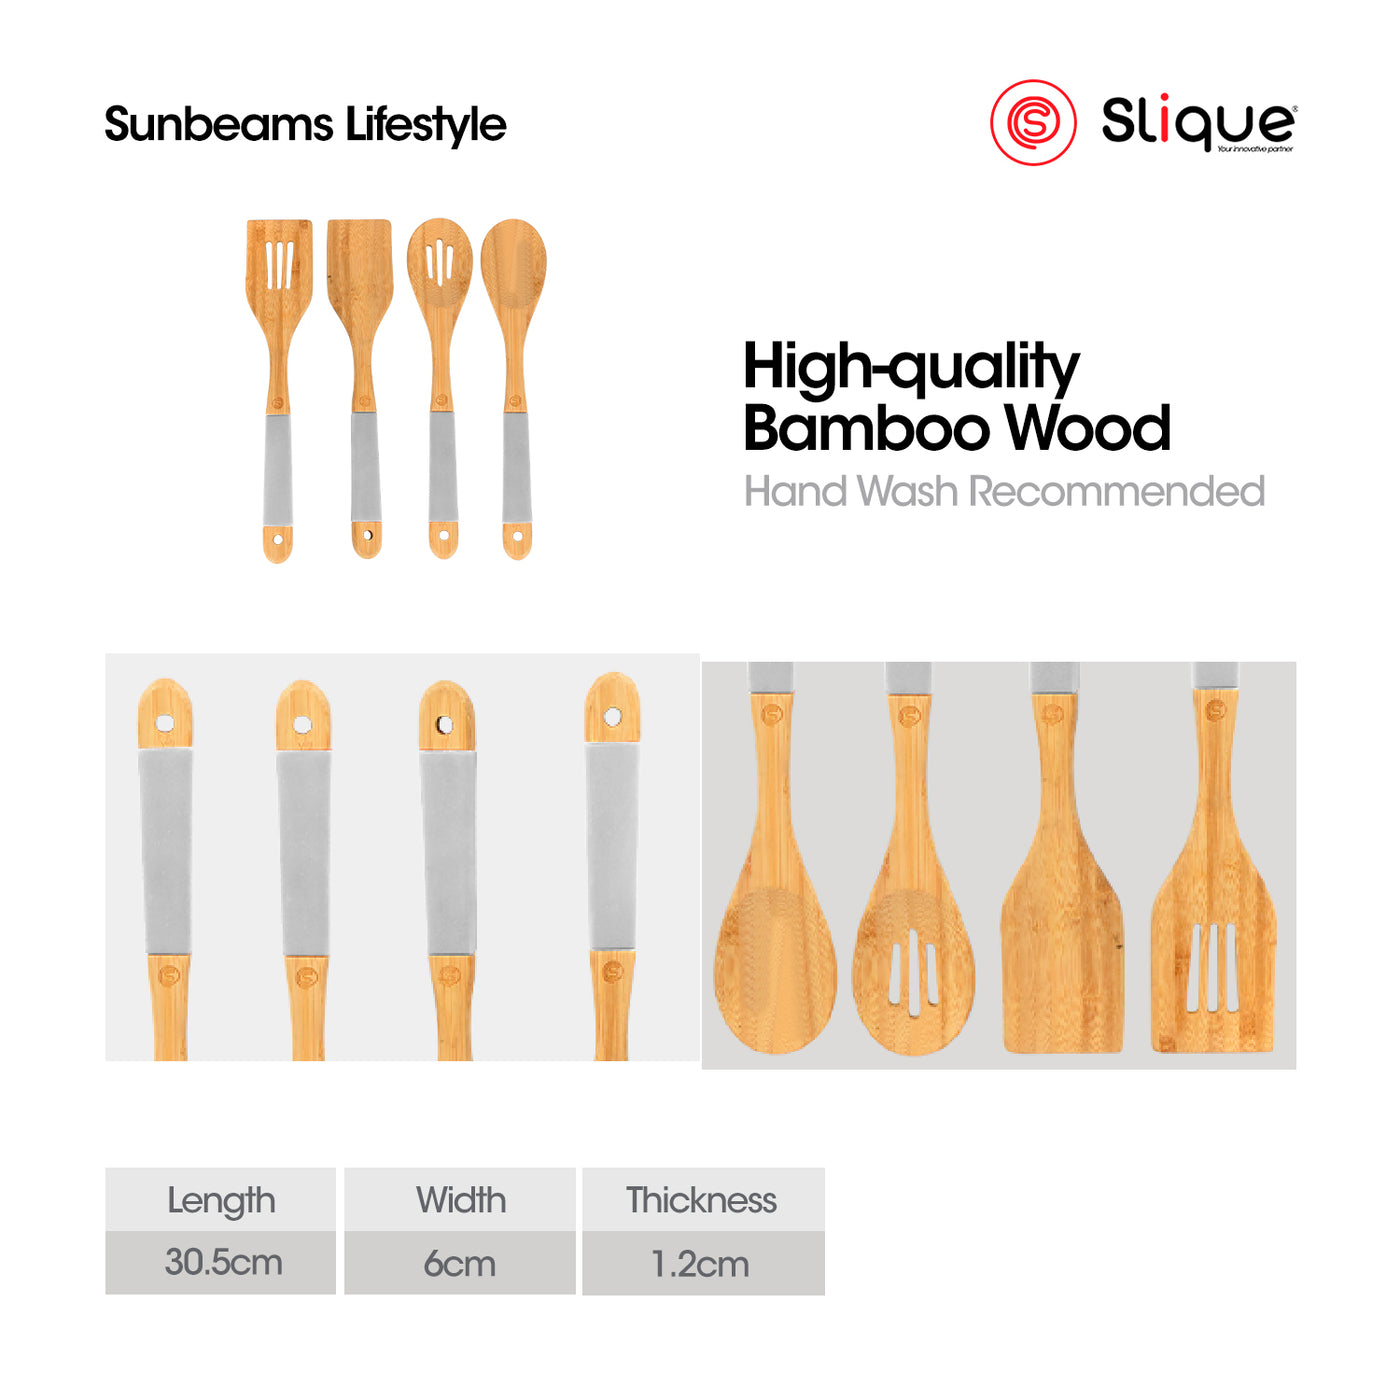 SLIQUE Wooden Kitchen Tools Set of 4 | Utensil Set